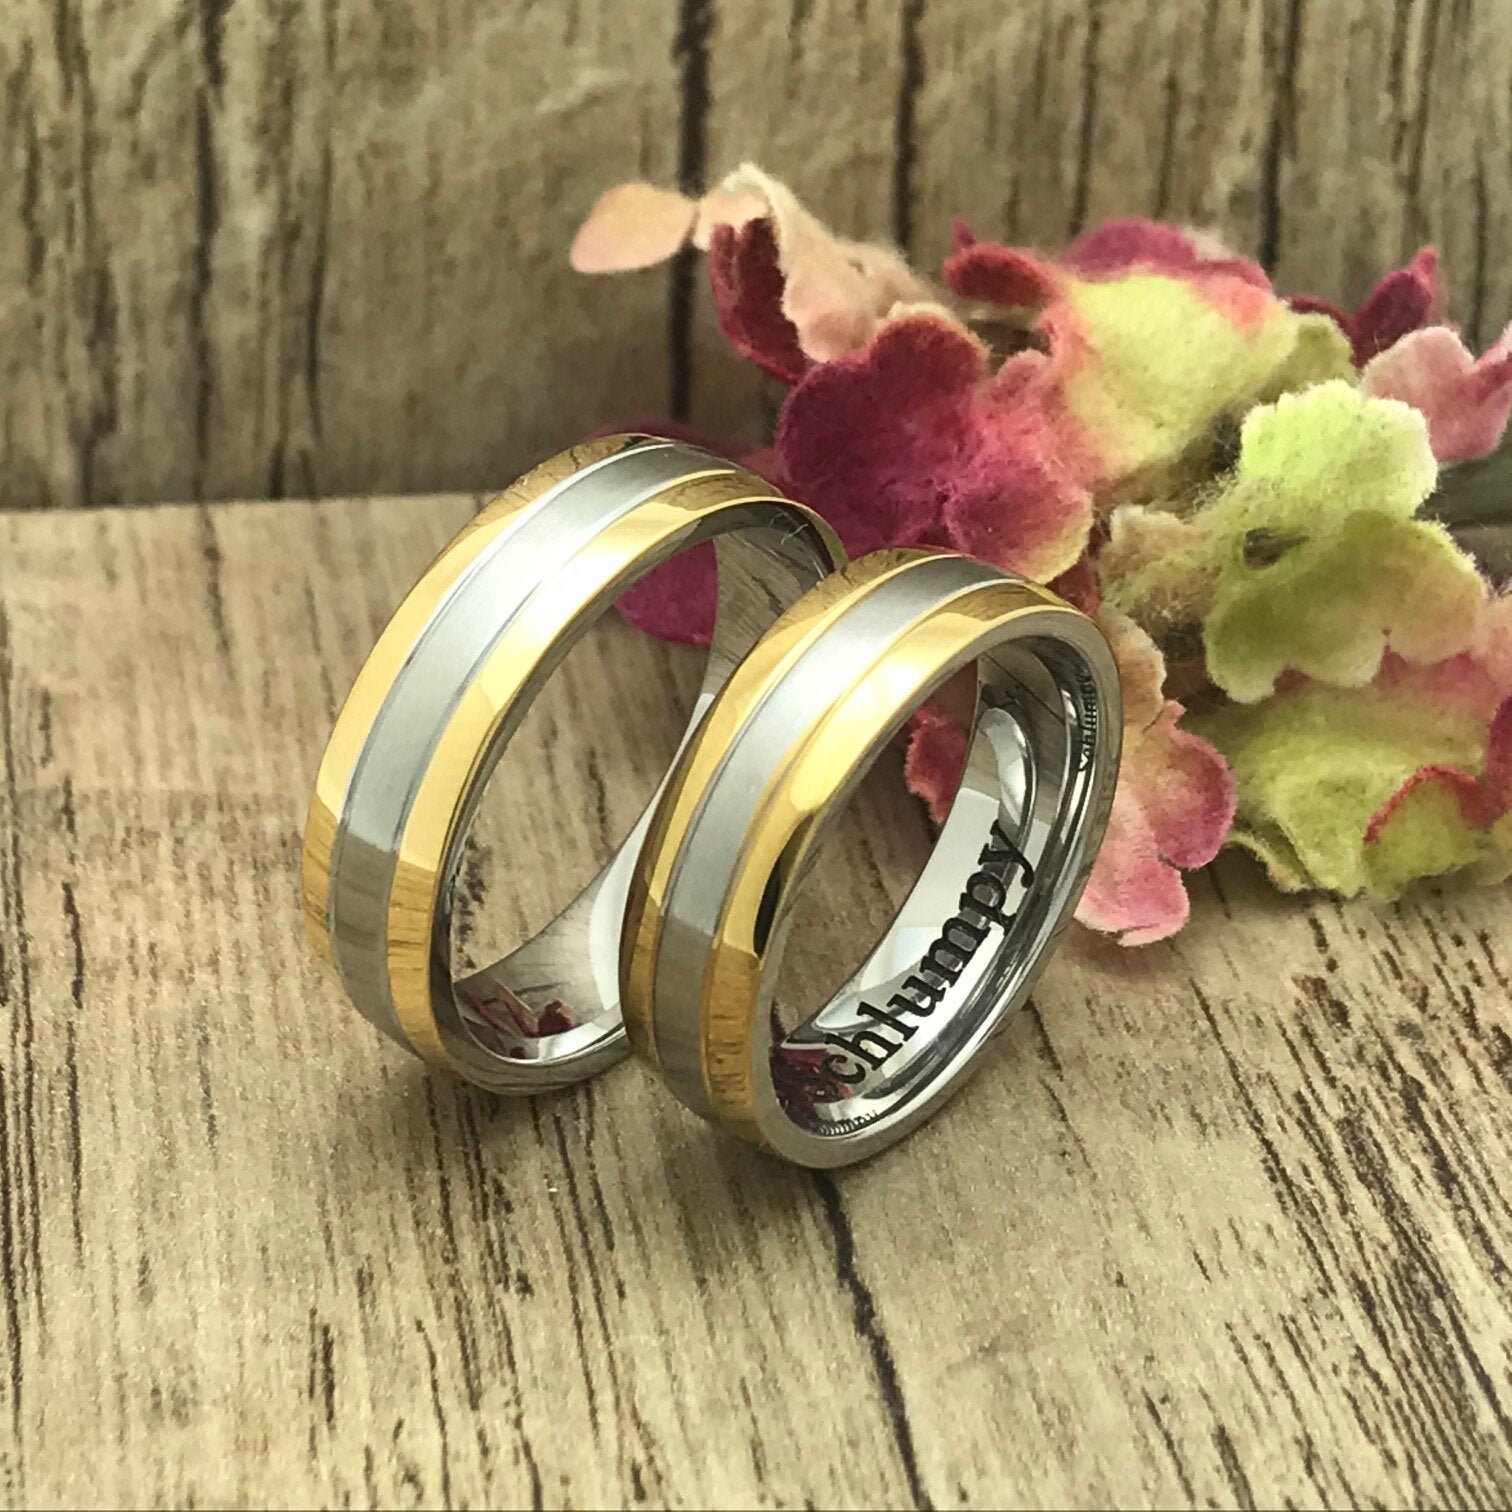 His and Hers Wedding Rings - 3 pc Wedding Ring Set - Wedding Ring